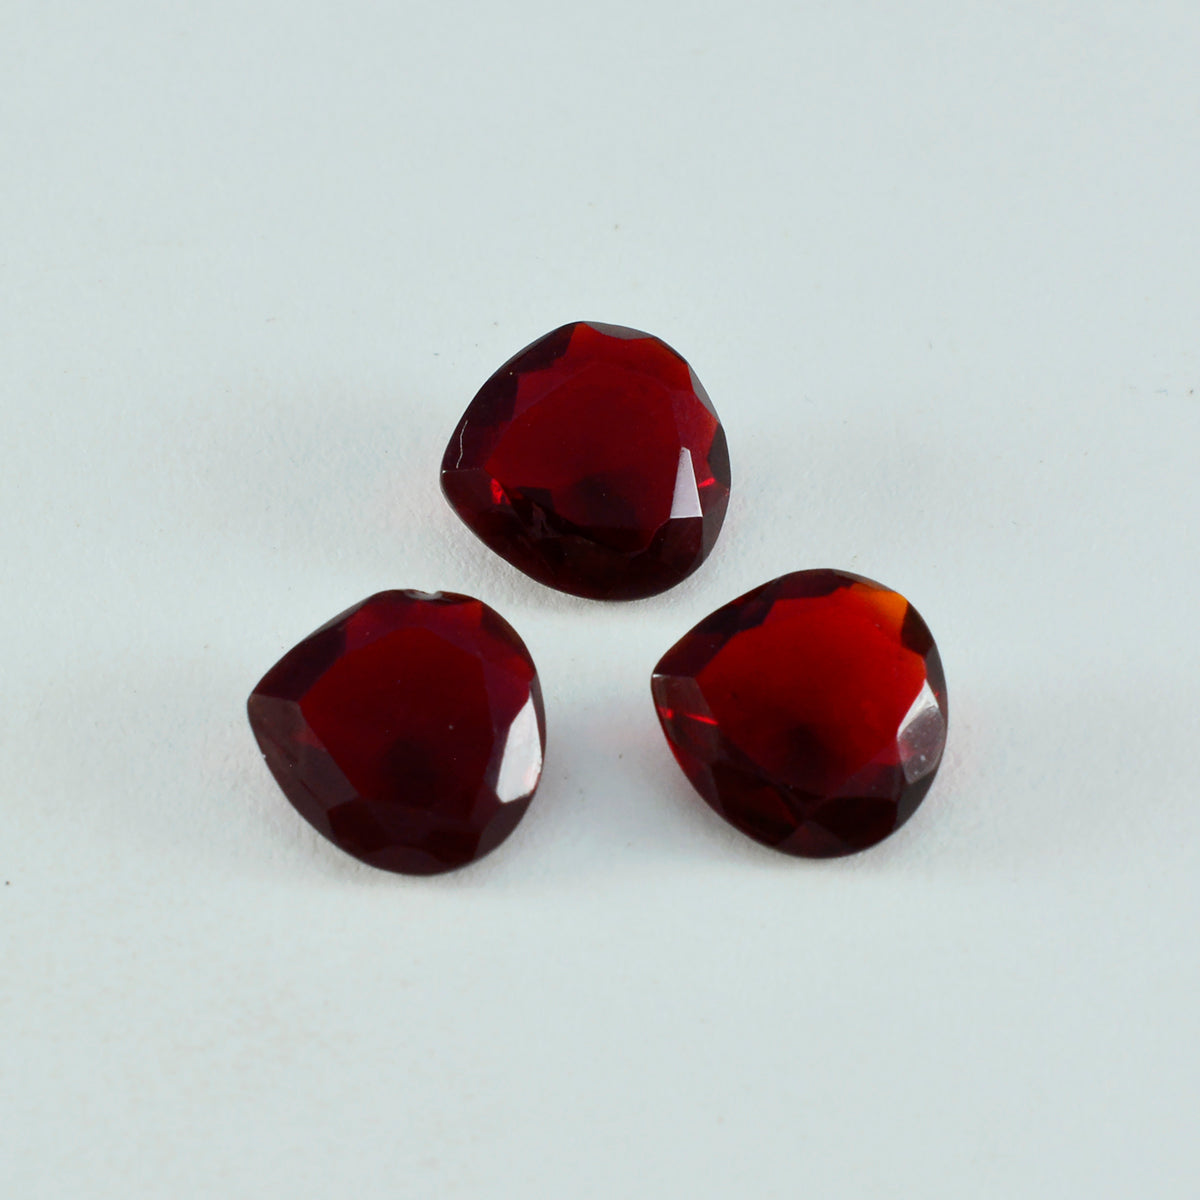 Riyogems 1 Stück roter Rubin mit CZ, facettiert, 15 x 15 mm, Herzform, AAA-Qualitätsedelstein